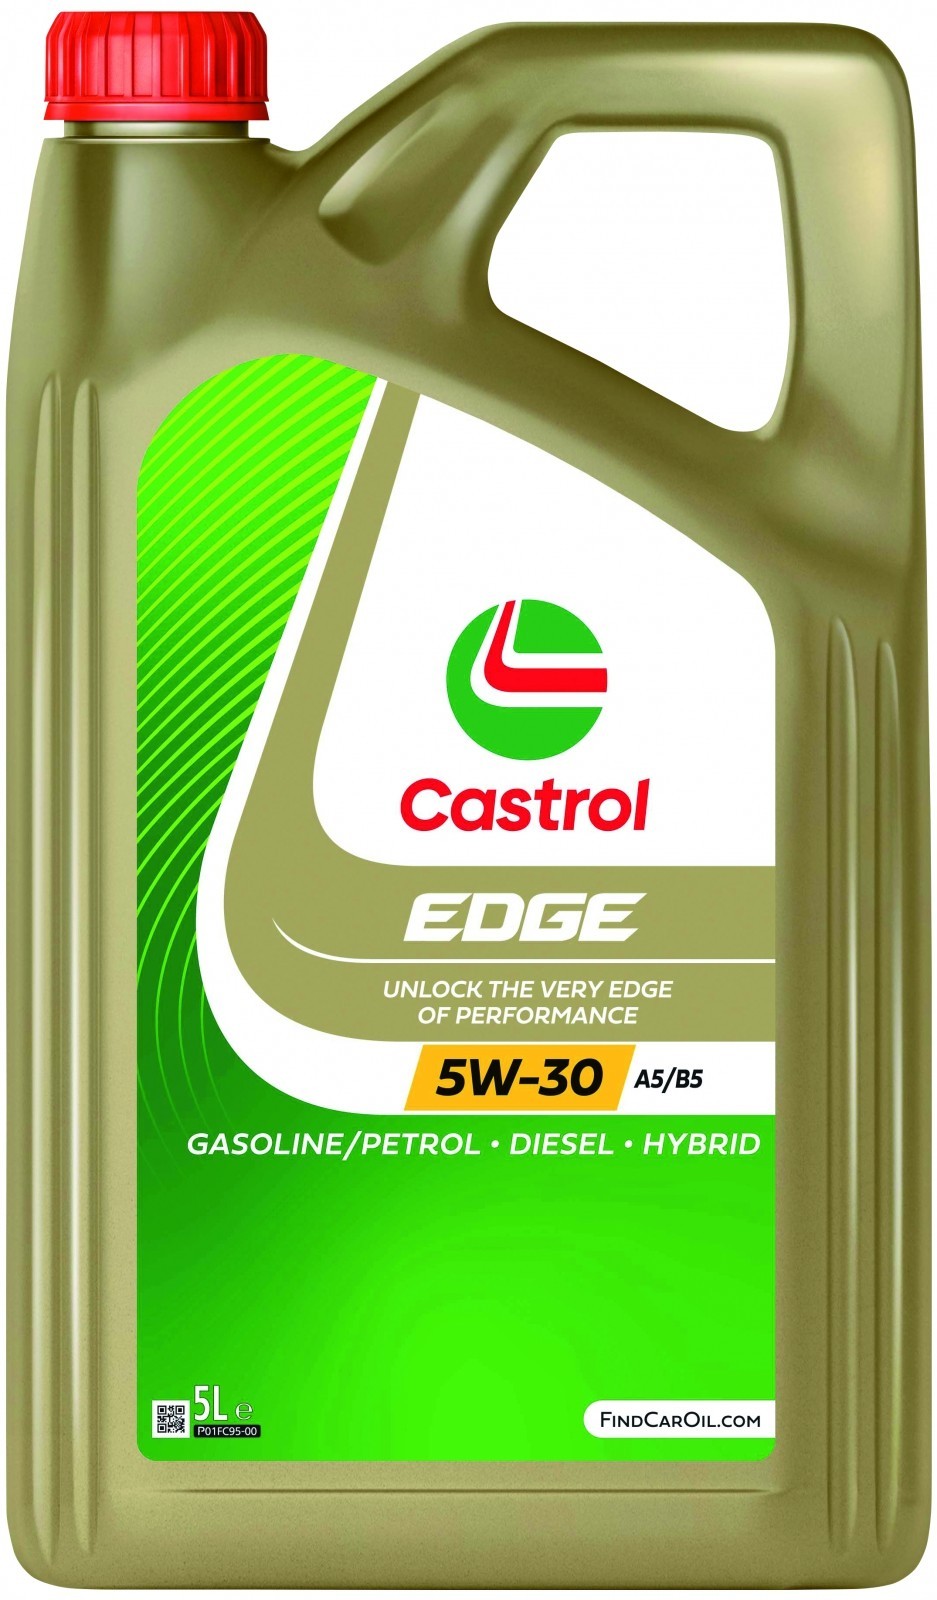 CASTROL Motoröl CASTROL EDGE 5W-30 A5/B5 5.0L